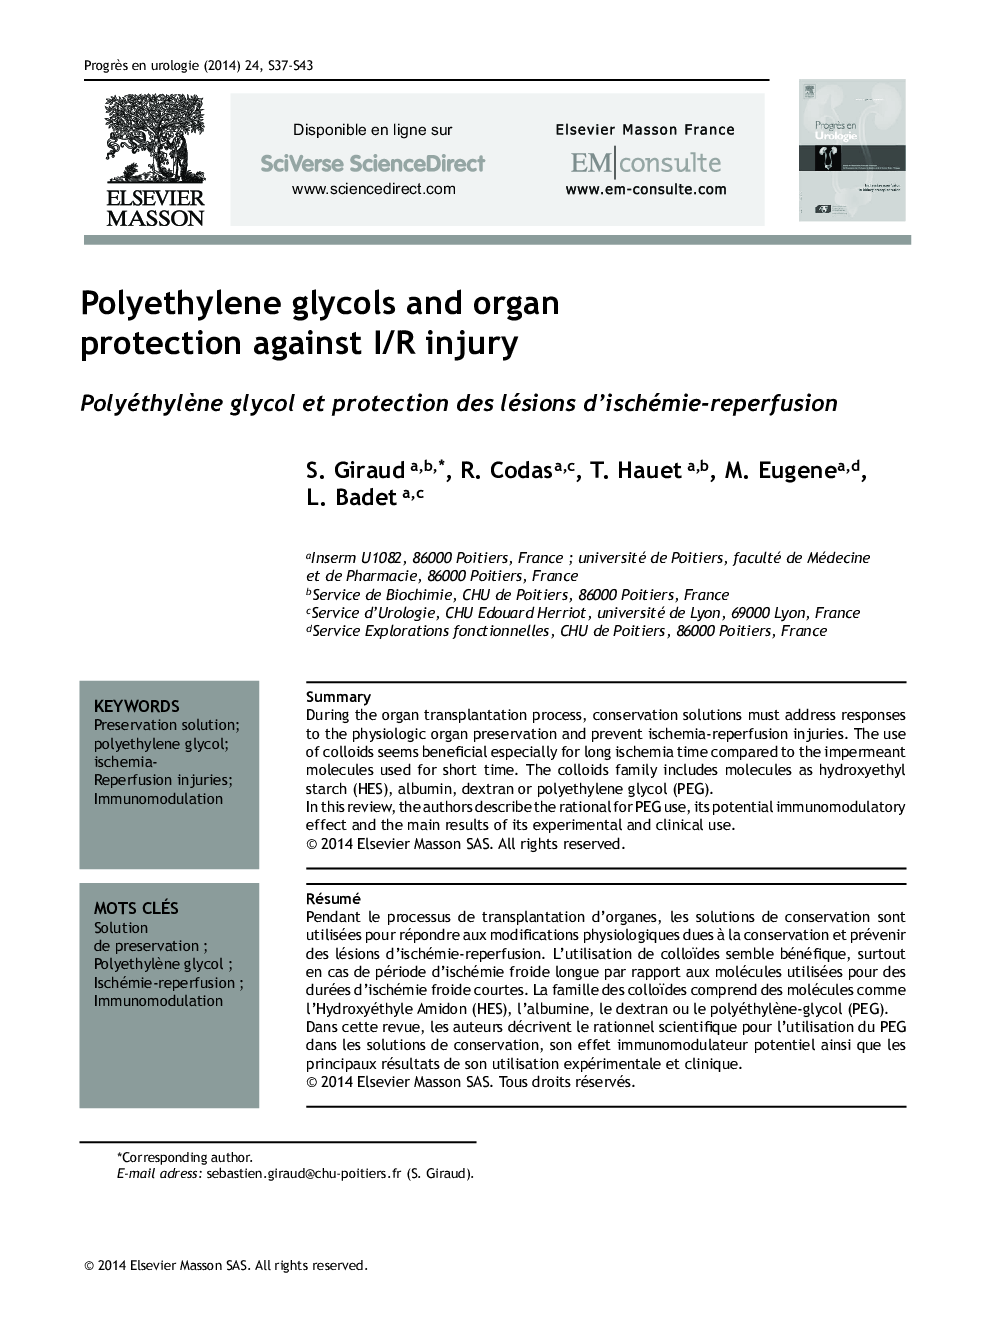 Polyethylene glycols and organ protection against I/R injury